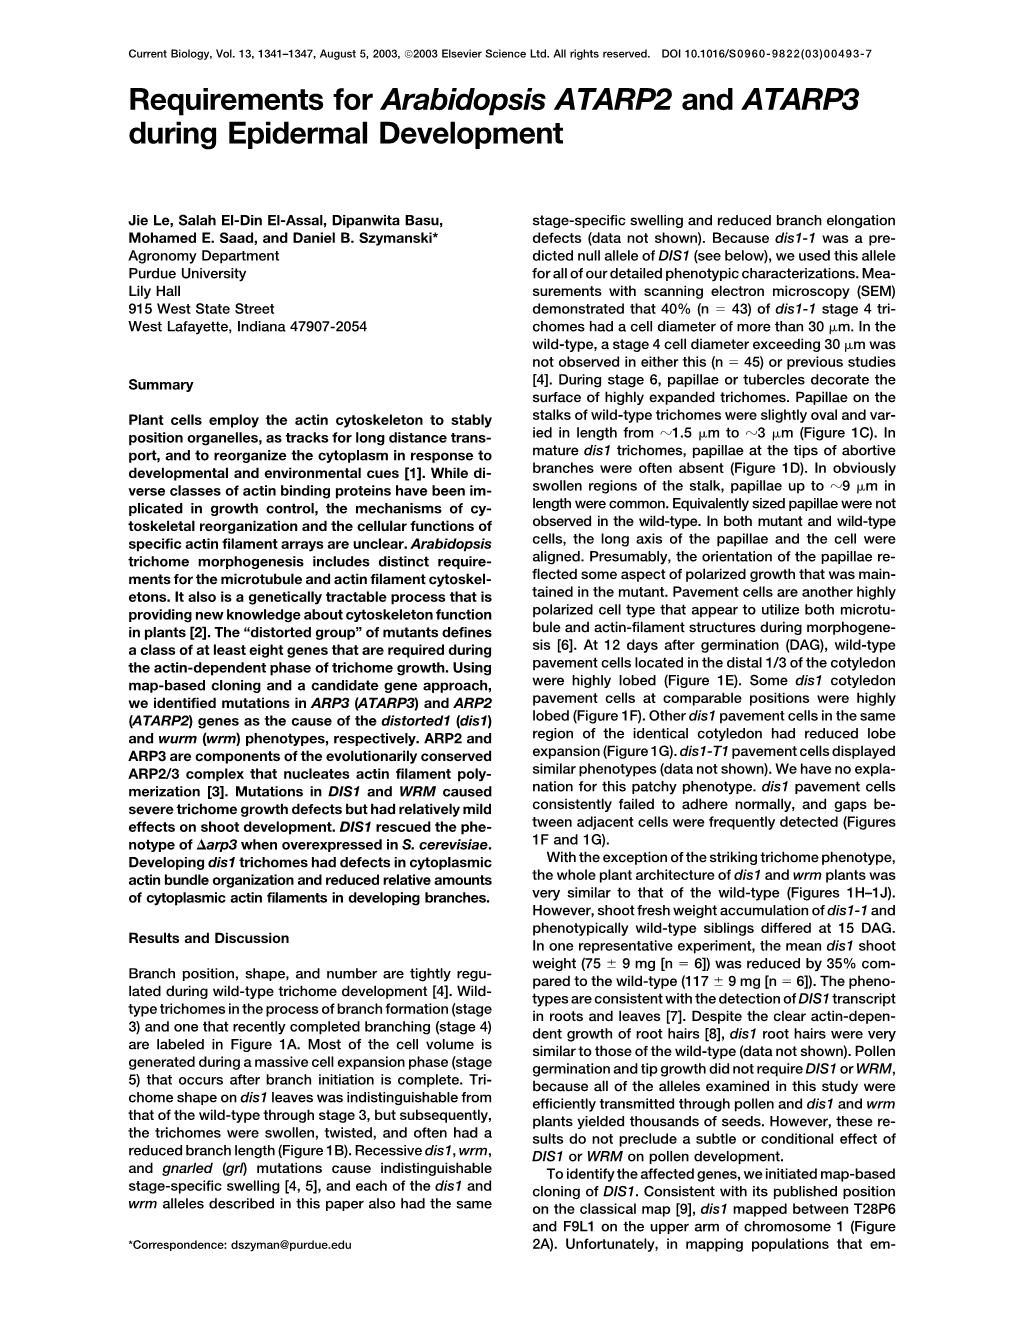 Requirements for Arabidopsis ATARP2 and ATARP3 During Epidermal Development